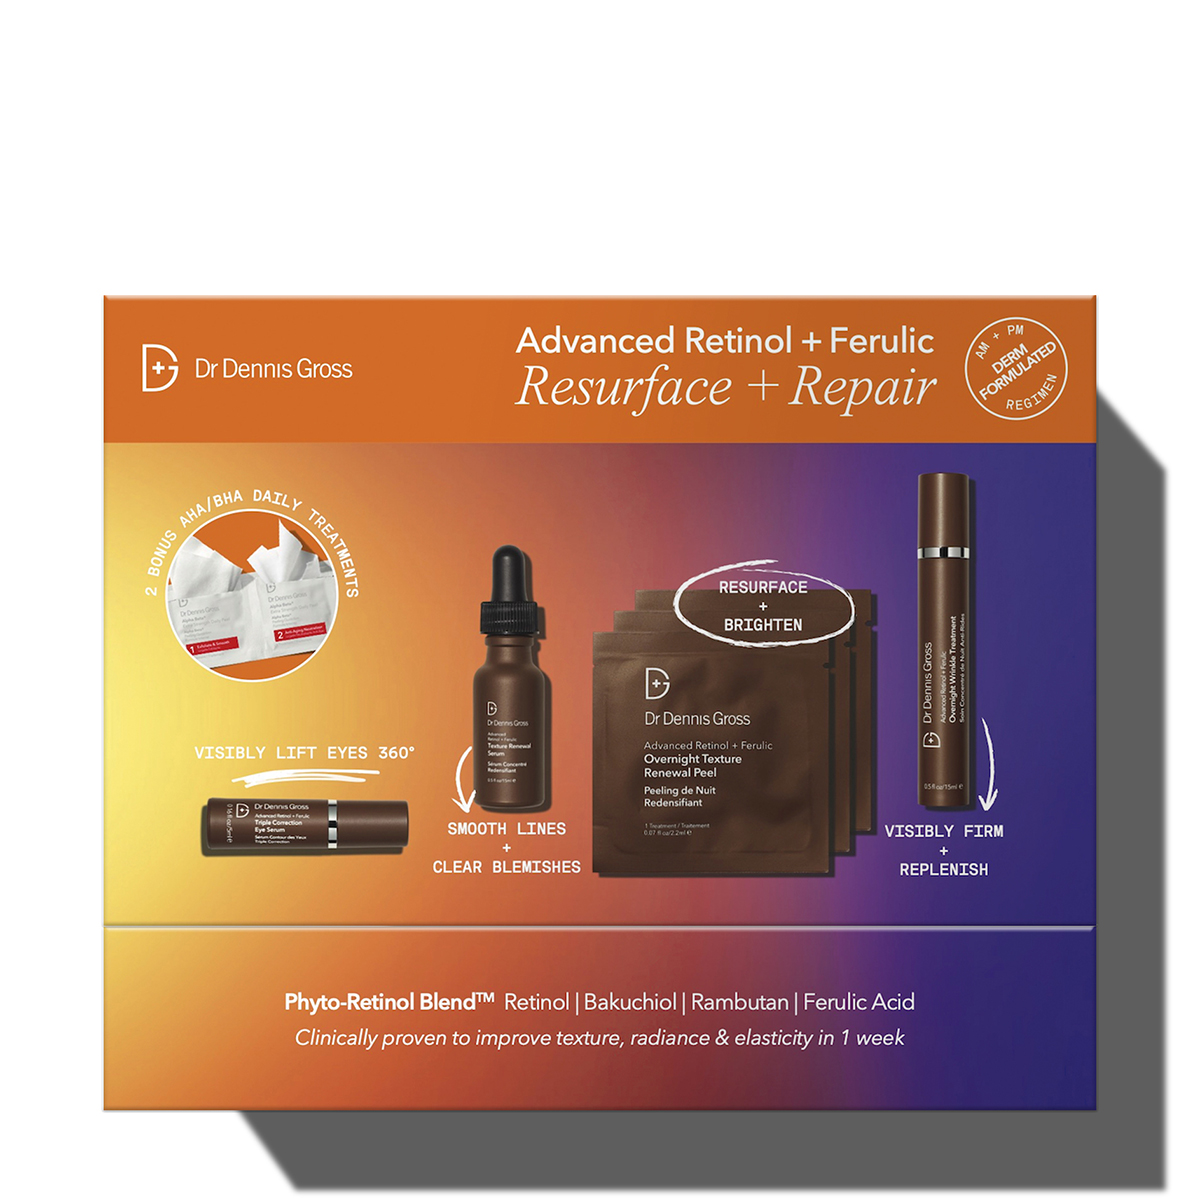 Dr Dennis Gross Advanced Retinol + Ferulic Resurface + Repair Kit